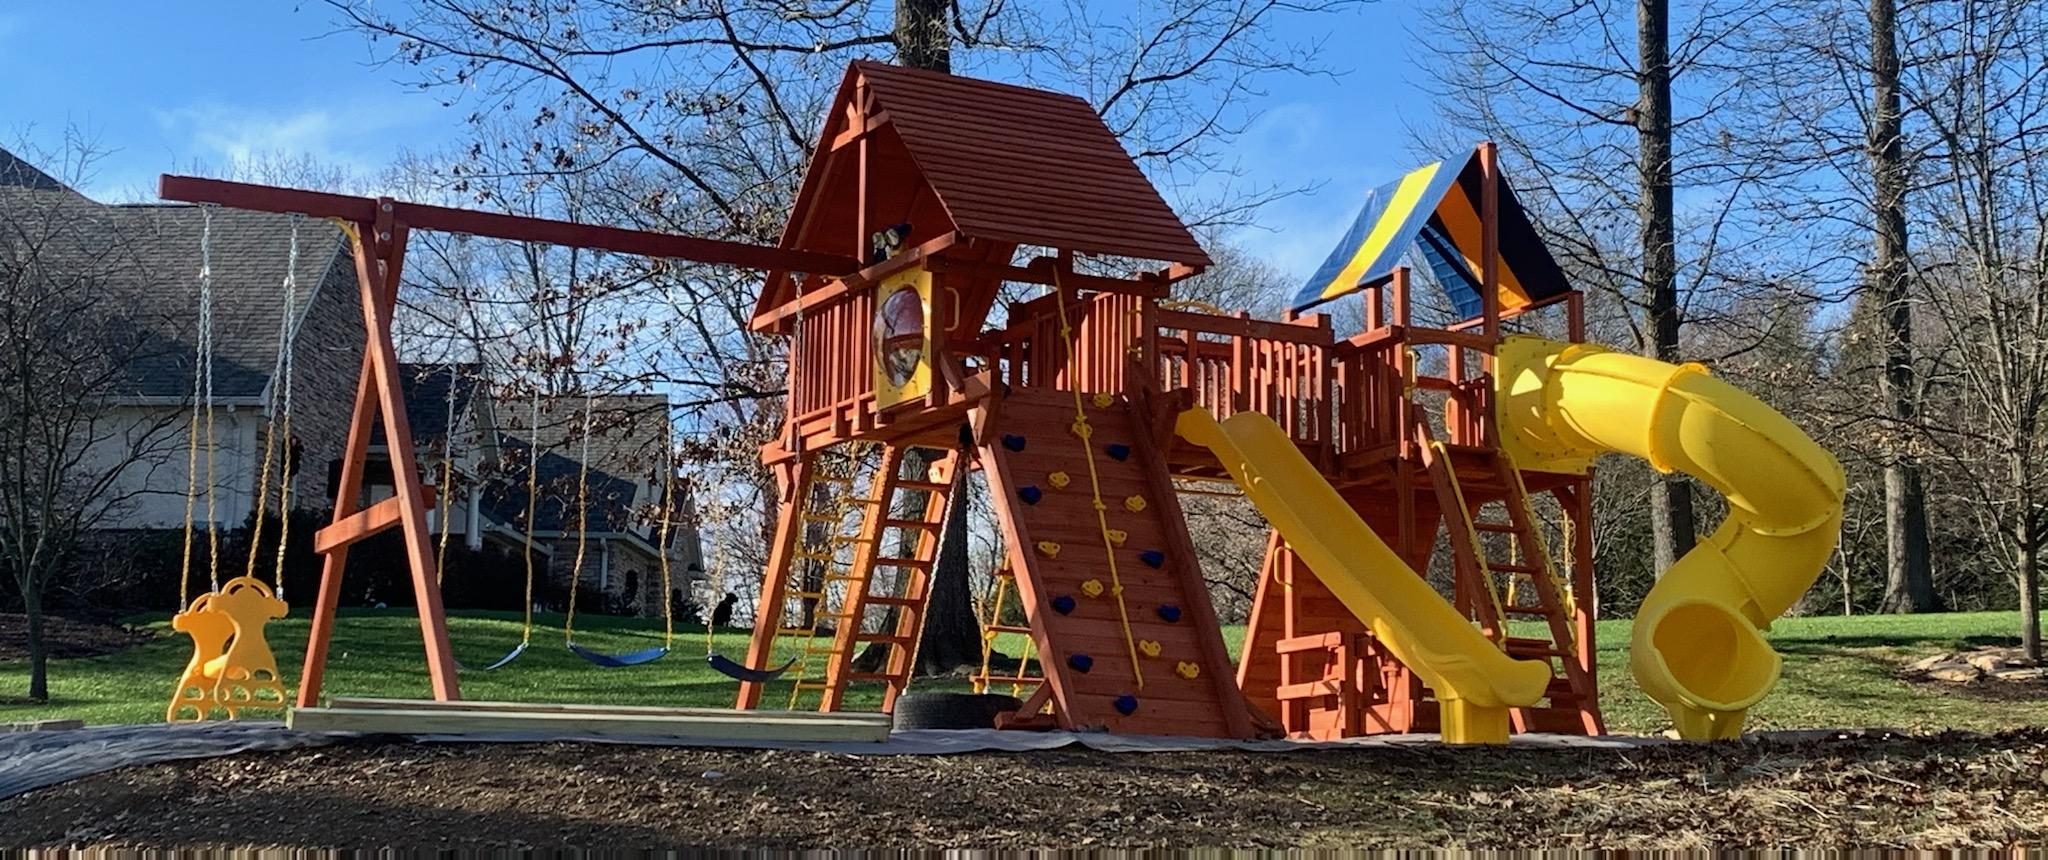 Playground-One-Custom-Swingset-by-NJ-Swingsets